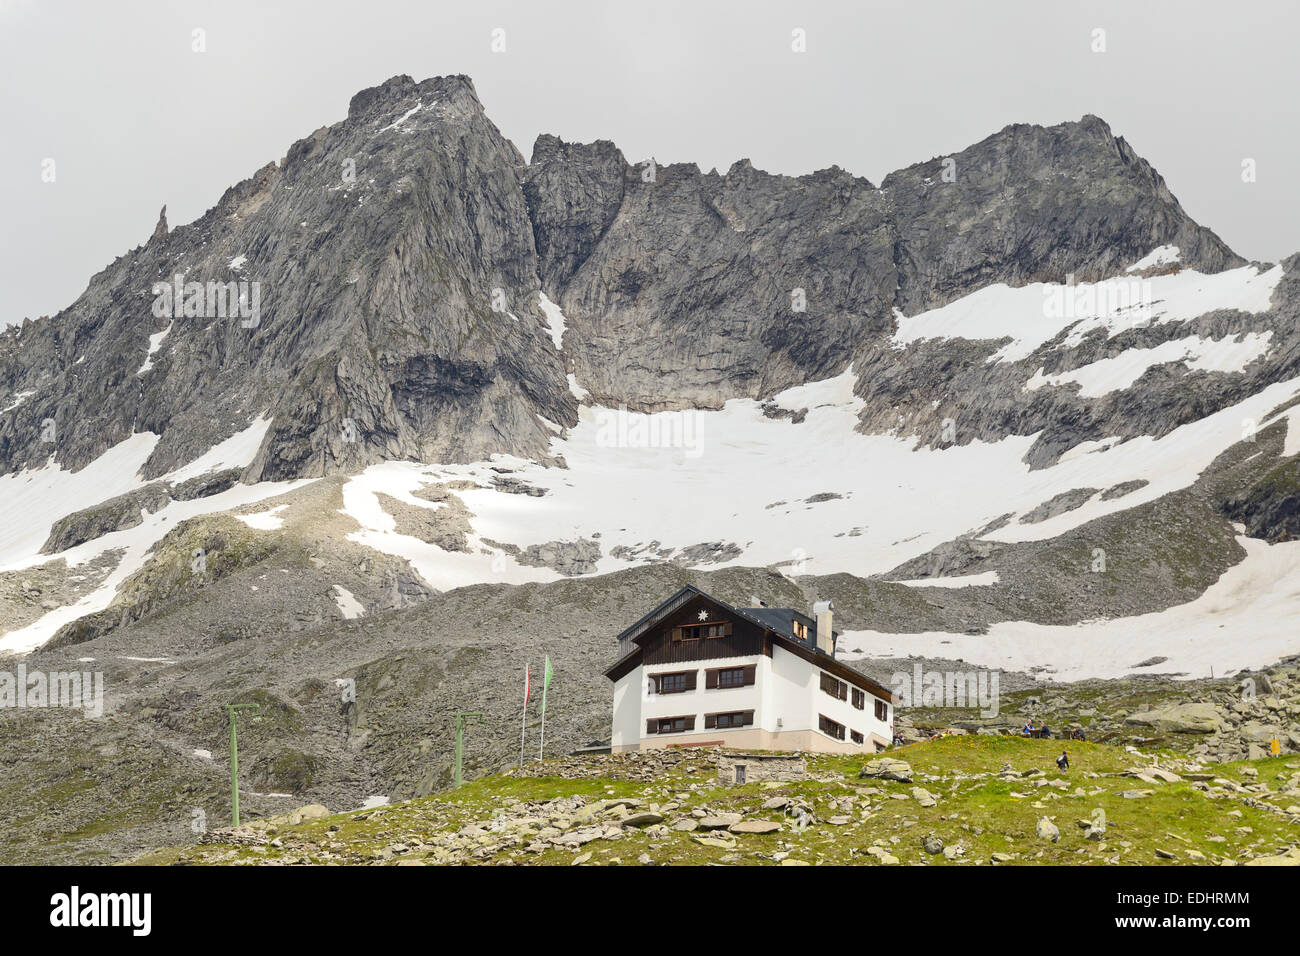 Plauener Huette (Plauen lodge) e Schwarzkopf montagna, Alpi della Zillertal, Tirolo, Austria Foto Stock